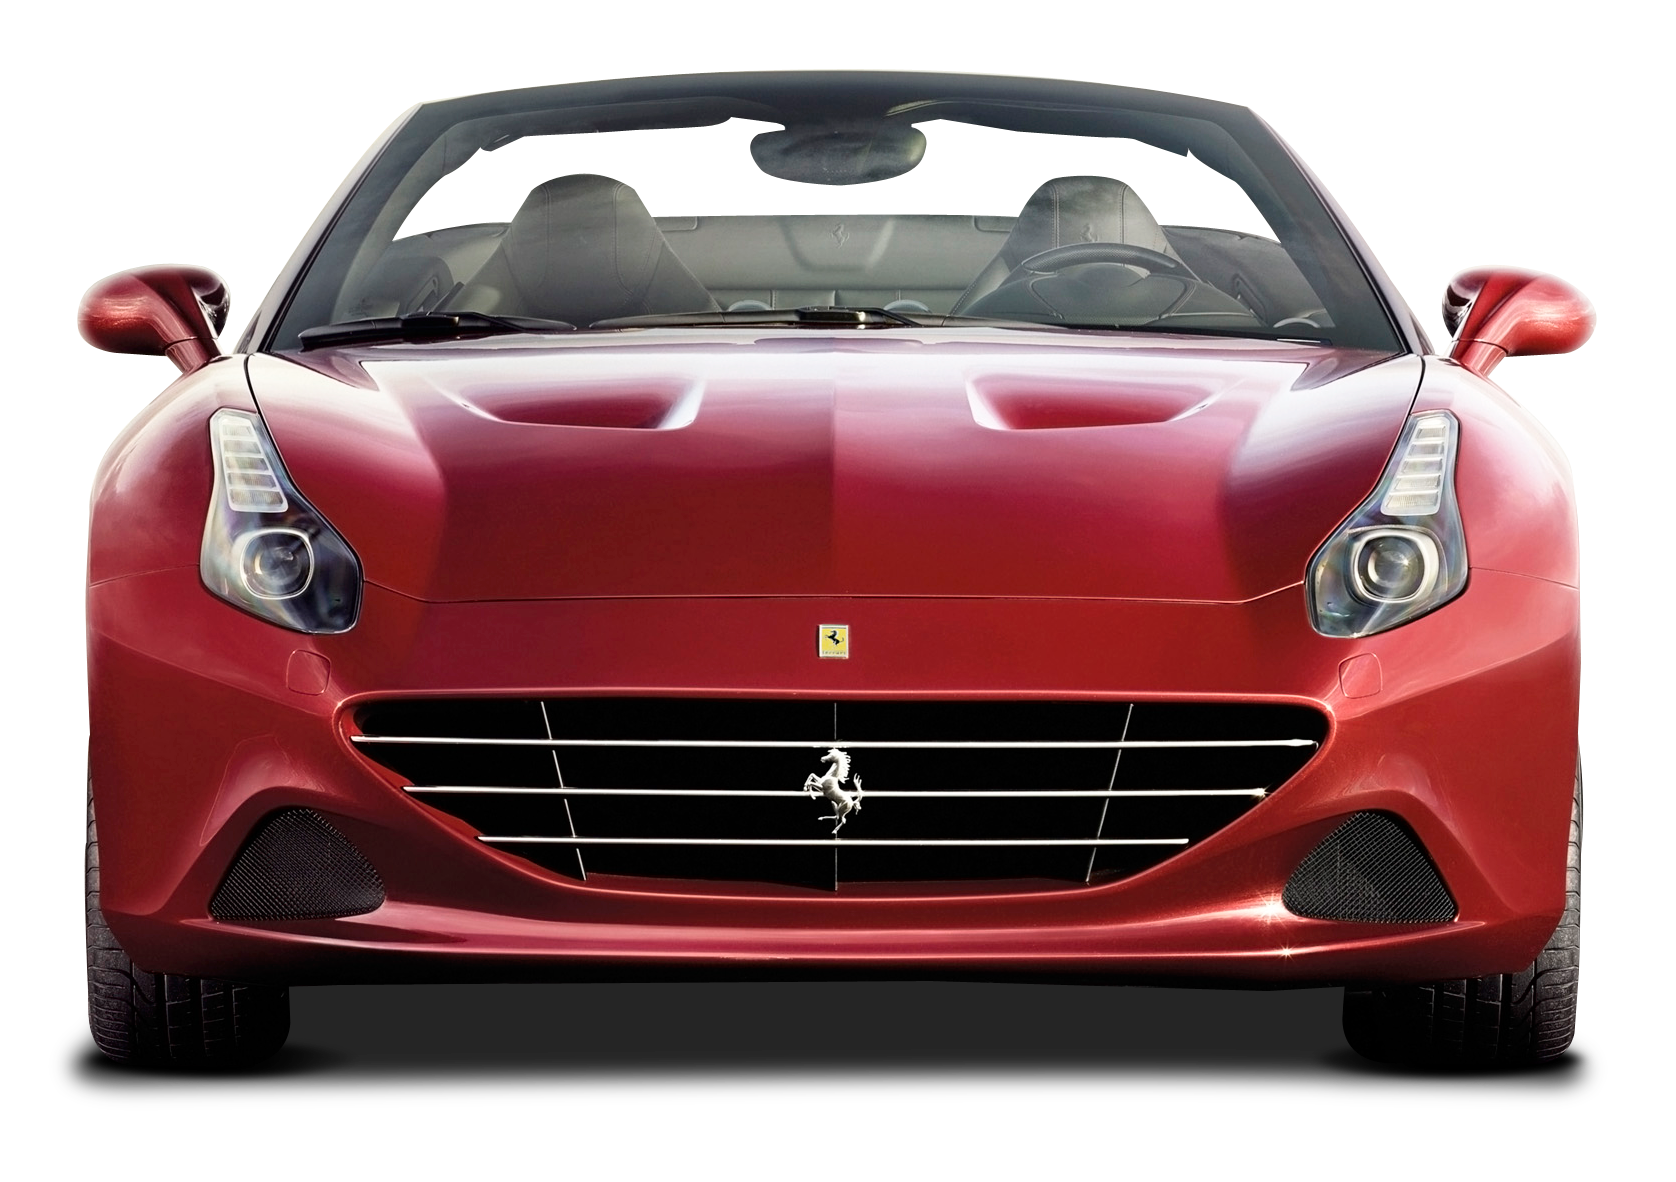 Front View of Ferrari California T Car